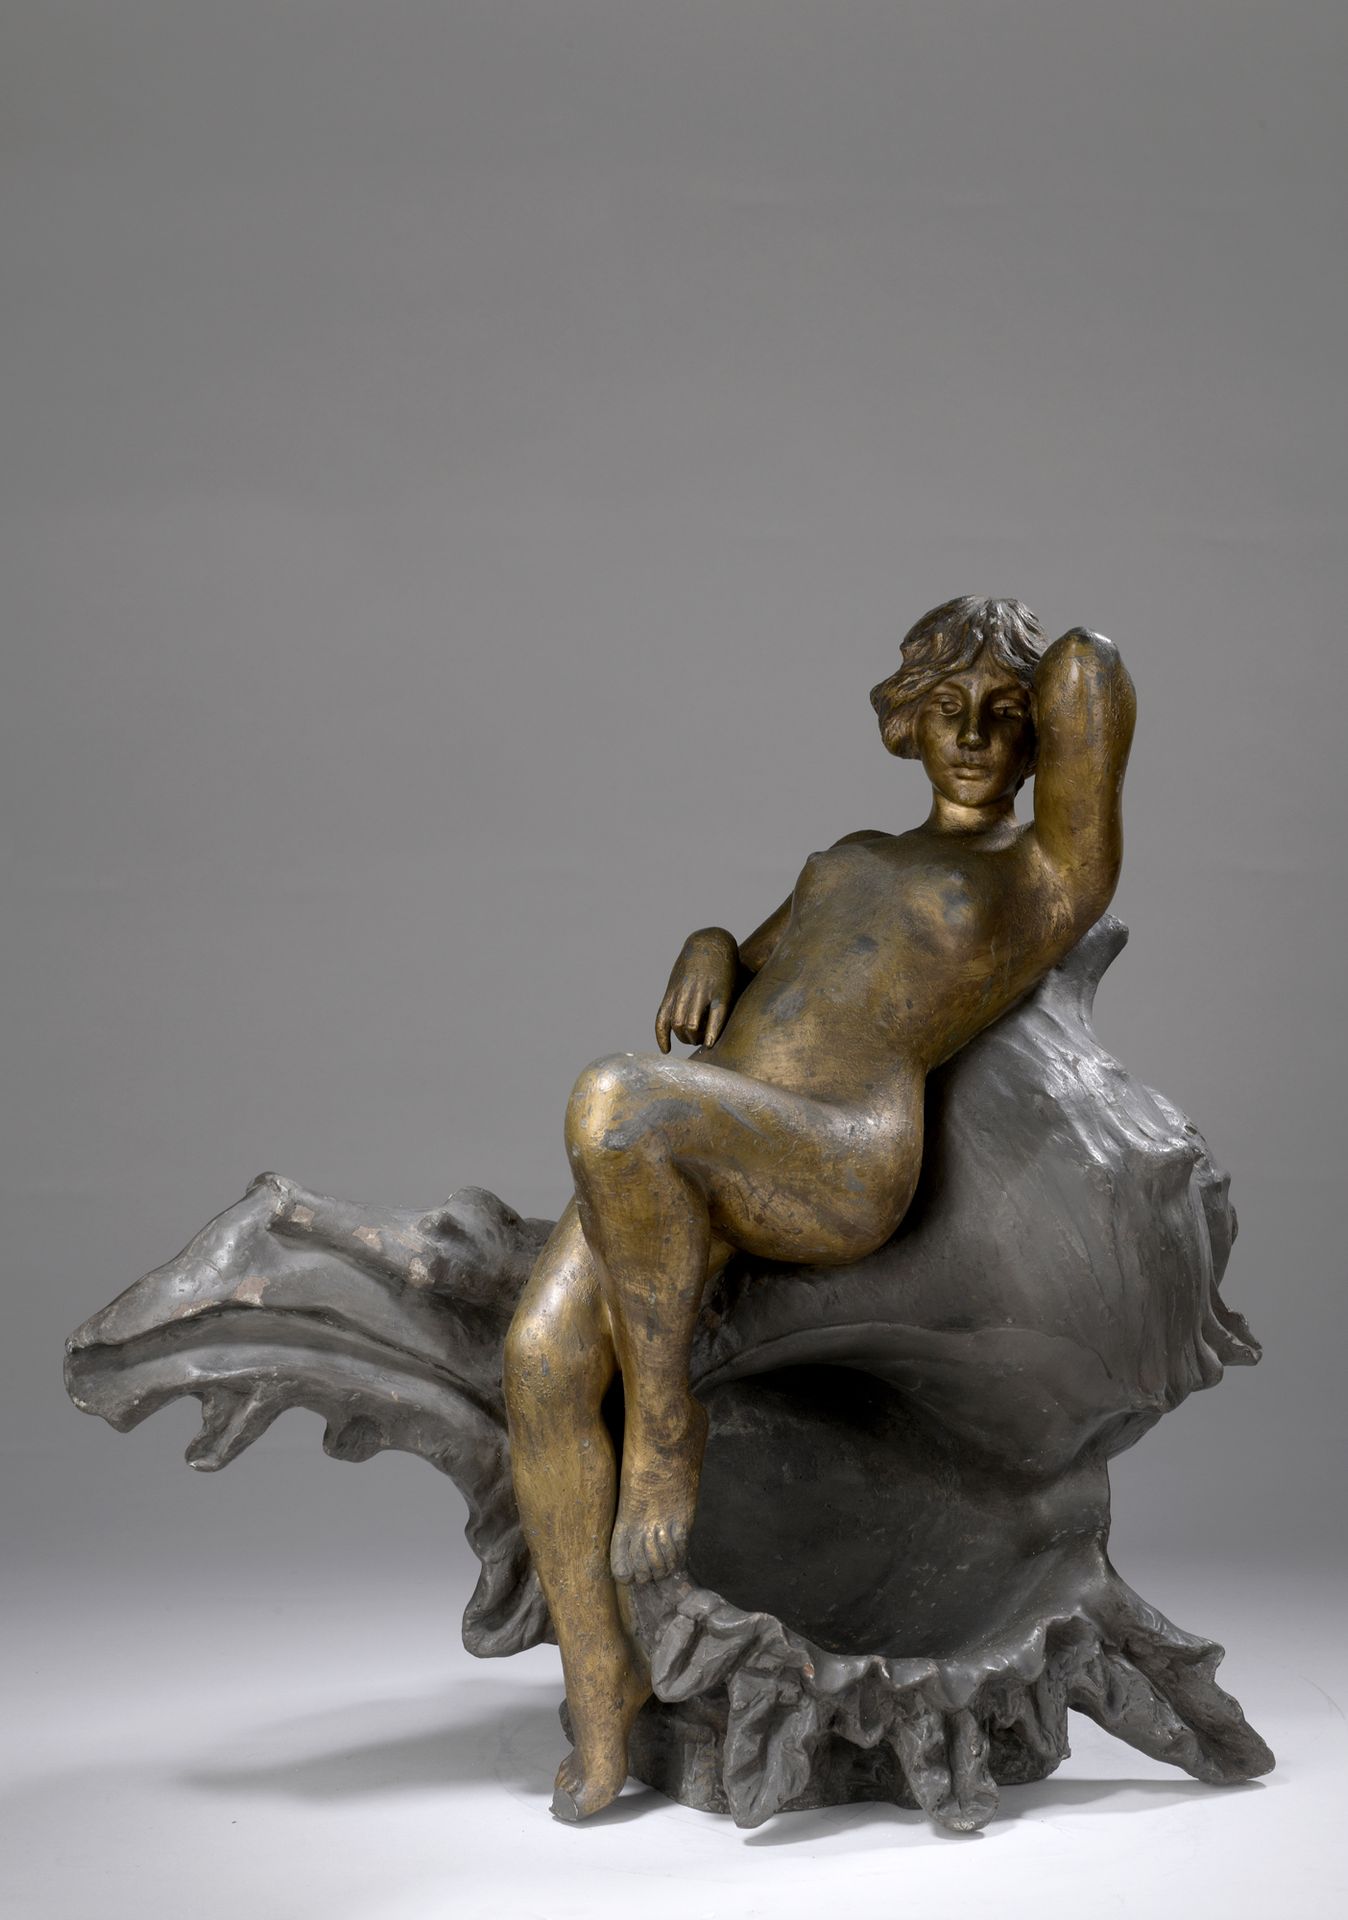 Null 埃马纽埃尔-维拉尼斯(1880-1920)

裸体

铸造锡器，带有锡器和鎏金的铜锈

背面海螺上有签名："VILLANIS

H.43厘米

小事故&hellip;